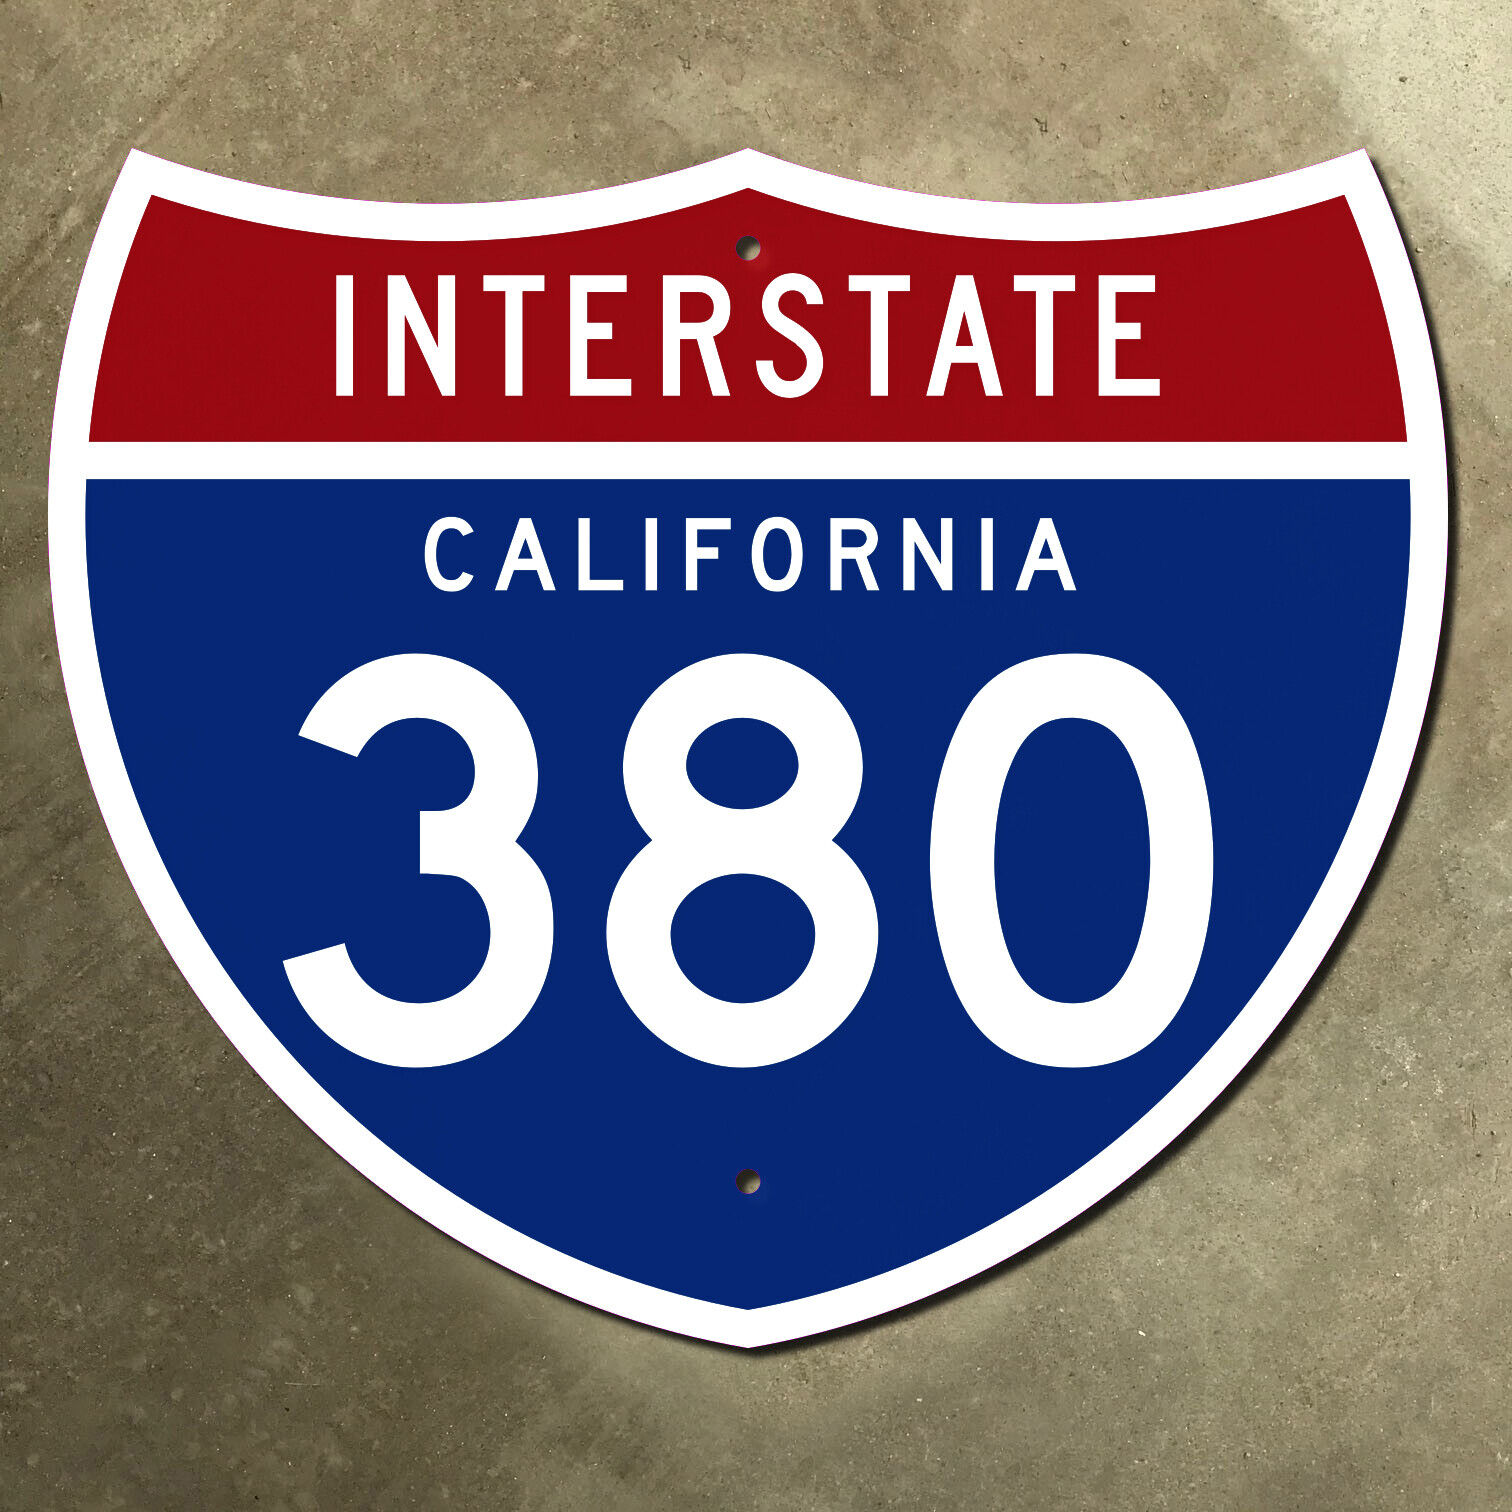 California Interstate 380 highway road sign San Bruno South San Francisco 12x10